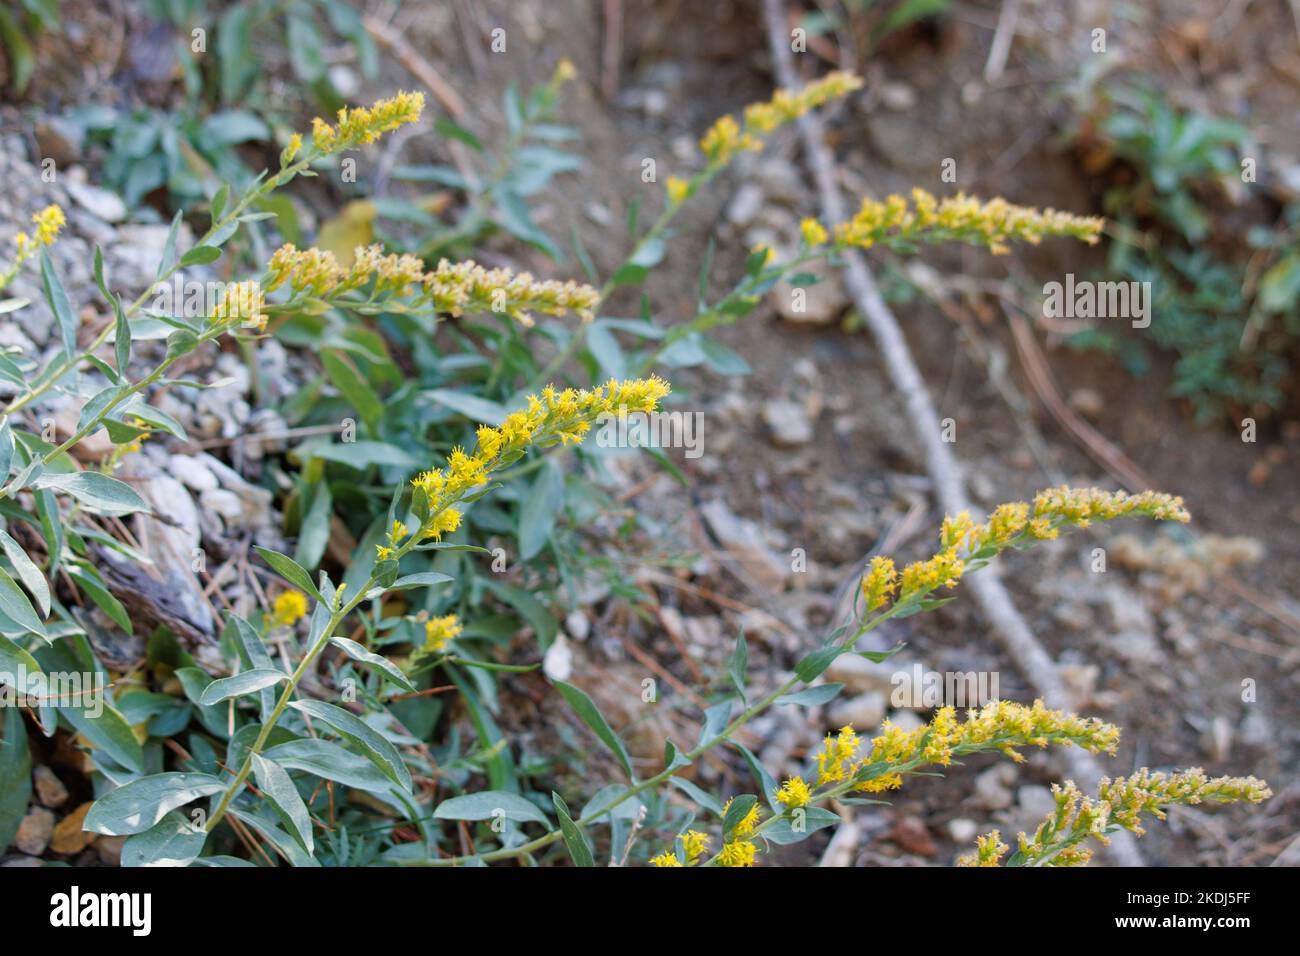 Yellow flowering racemose radiate head inflorescence of Solidago Velutina, Asteraceae, native perennial herb in the San Emigdio Mountains, Autumn. Stock Photo